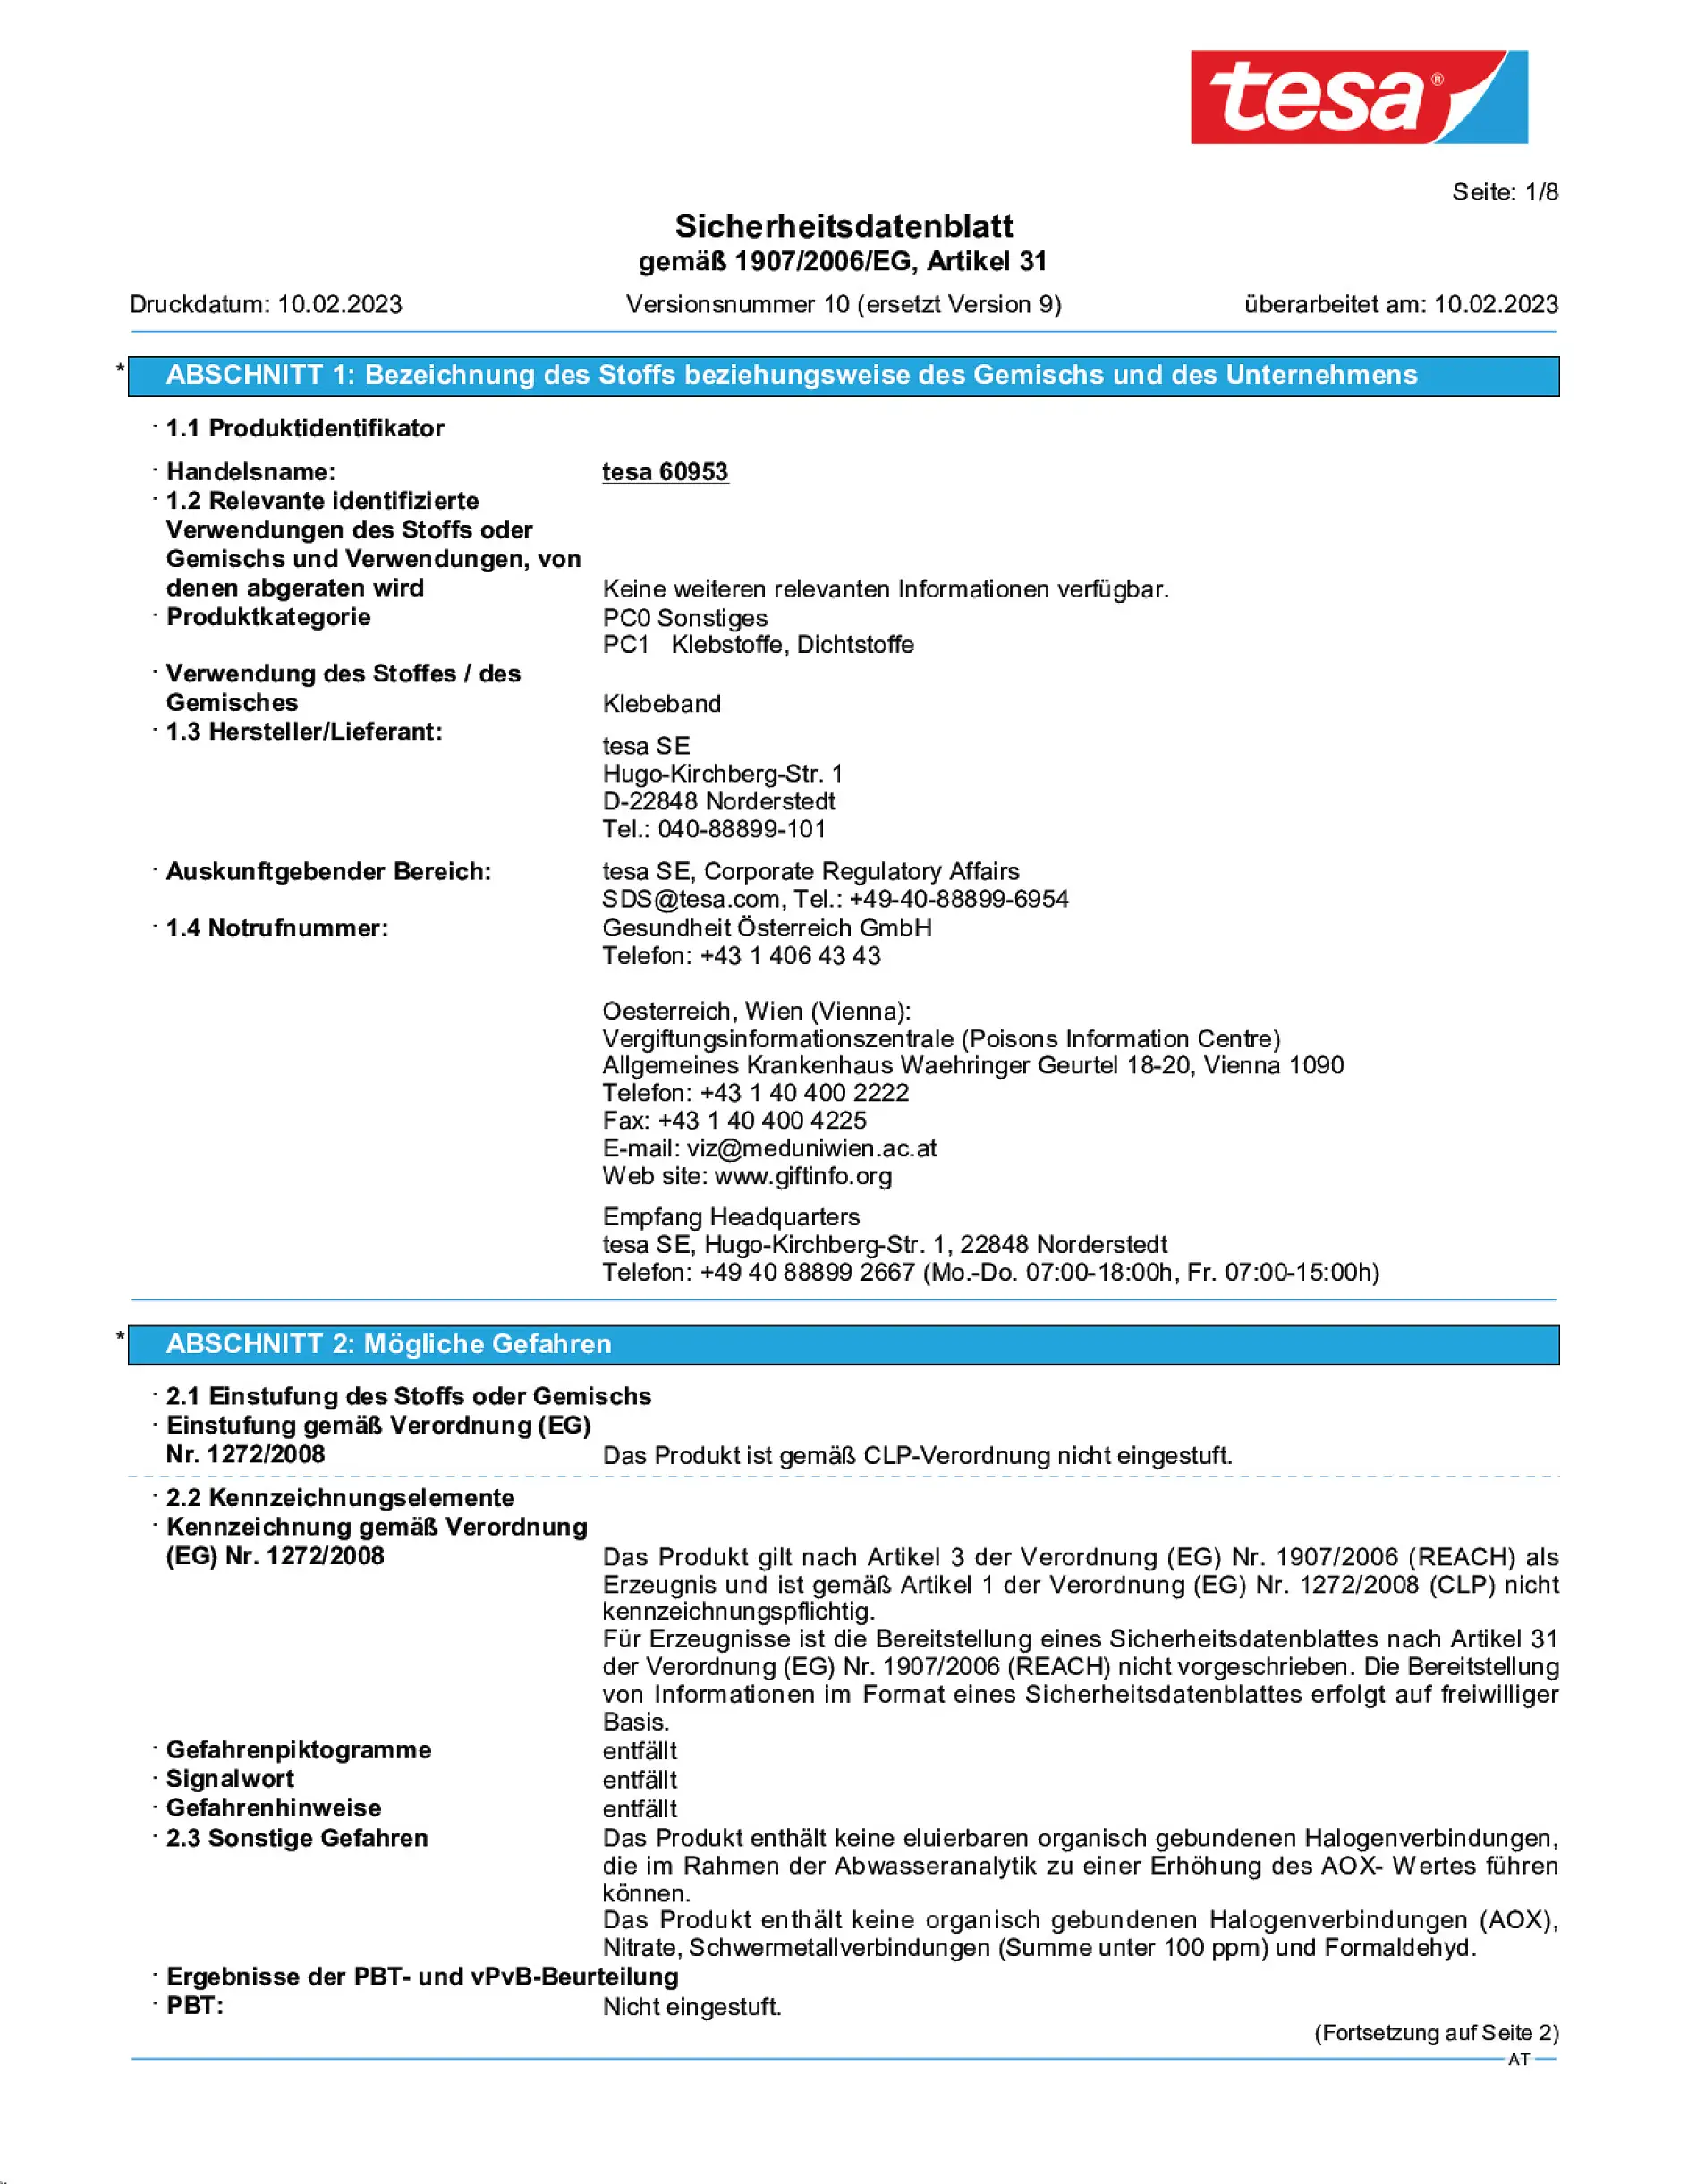 Safety data sheet_tesa® Professional 60953_de-AT_v10